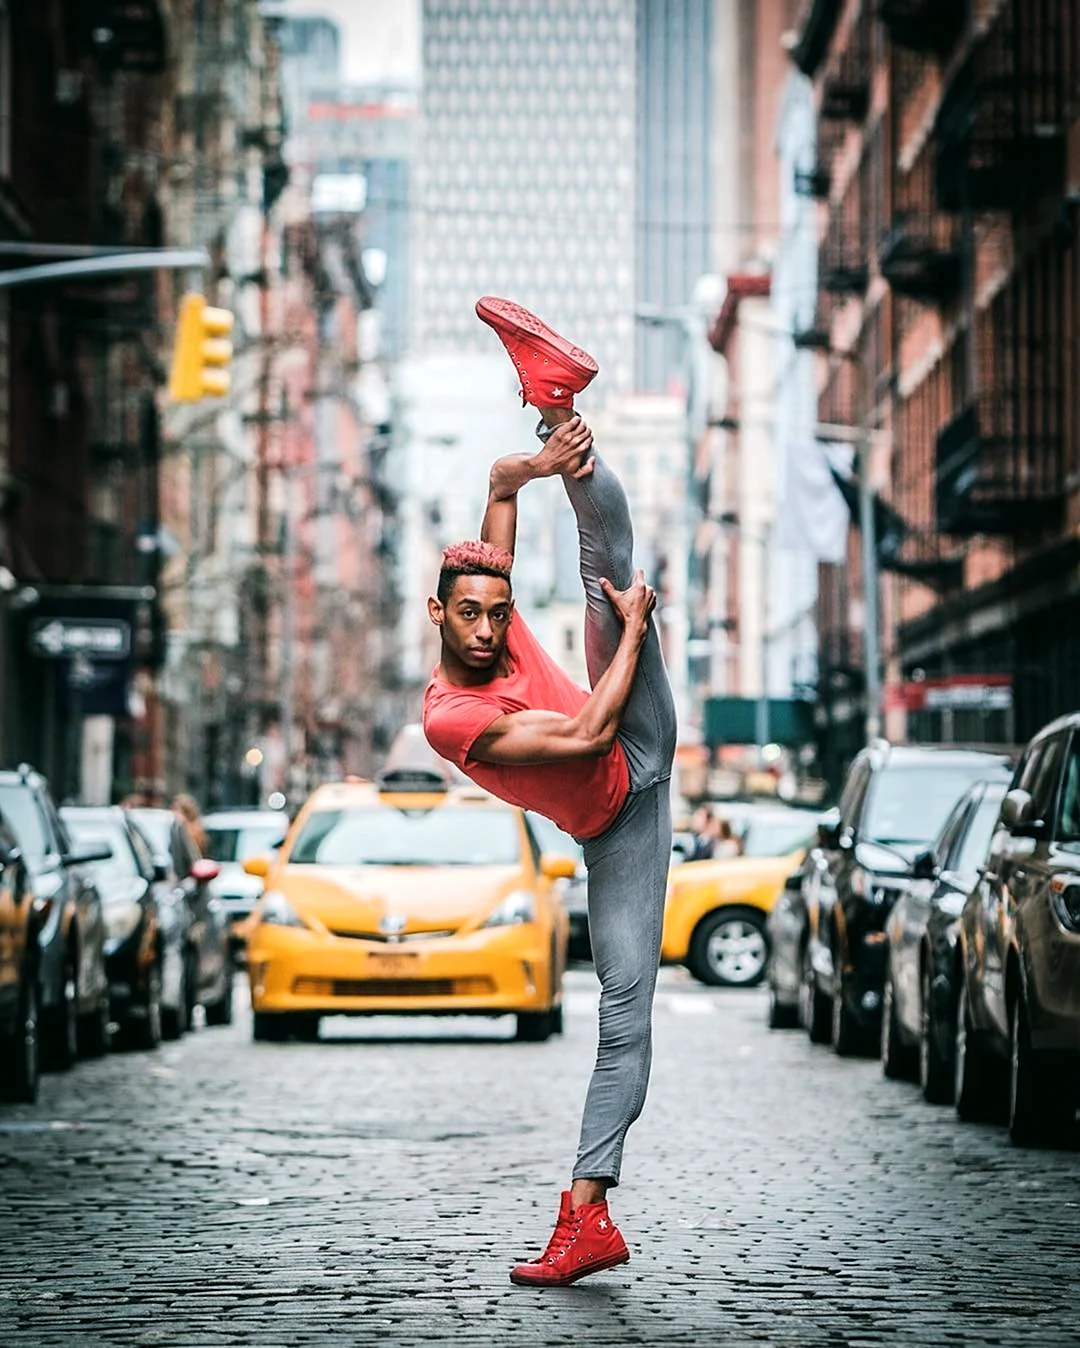 Танцоры балета на улицах Нью-Йорка фотограф Omar z Robles